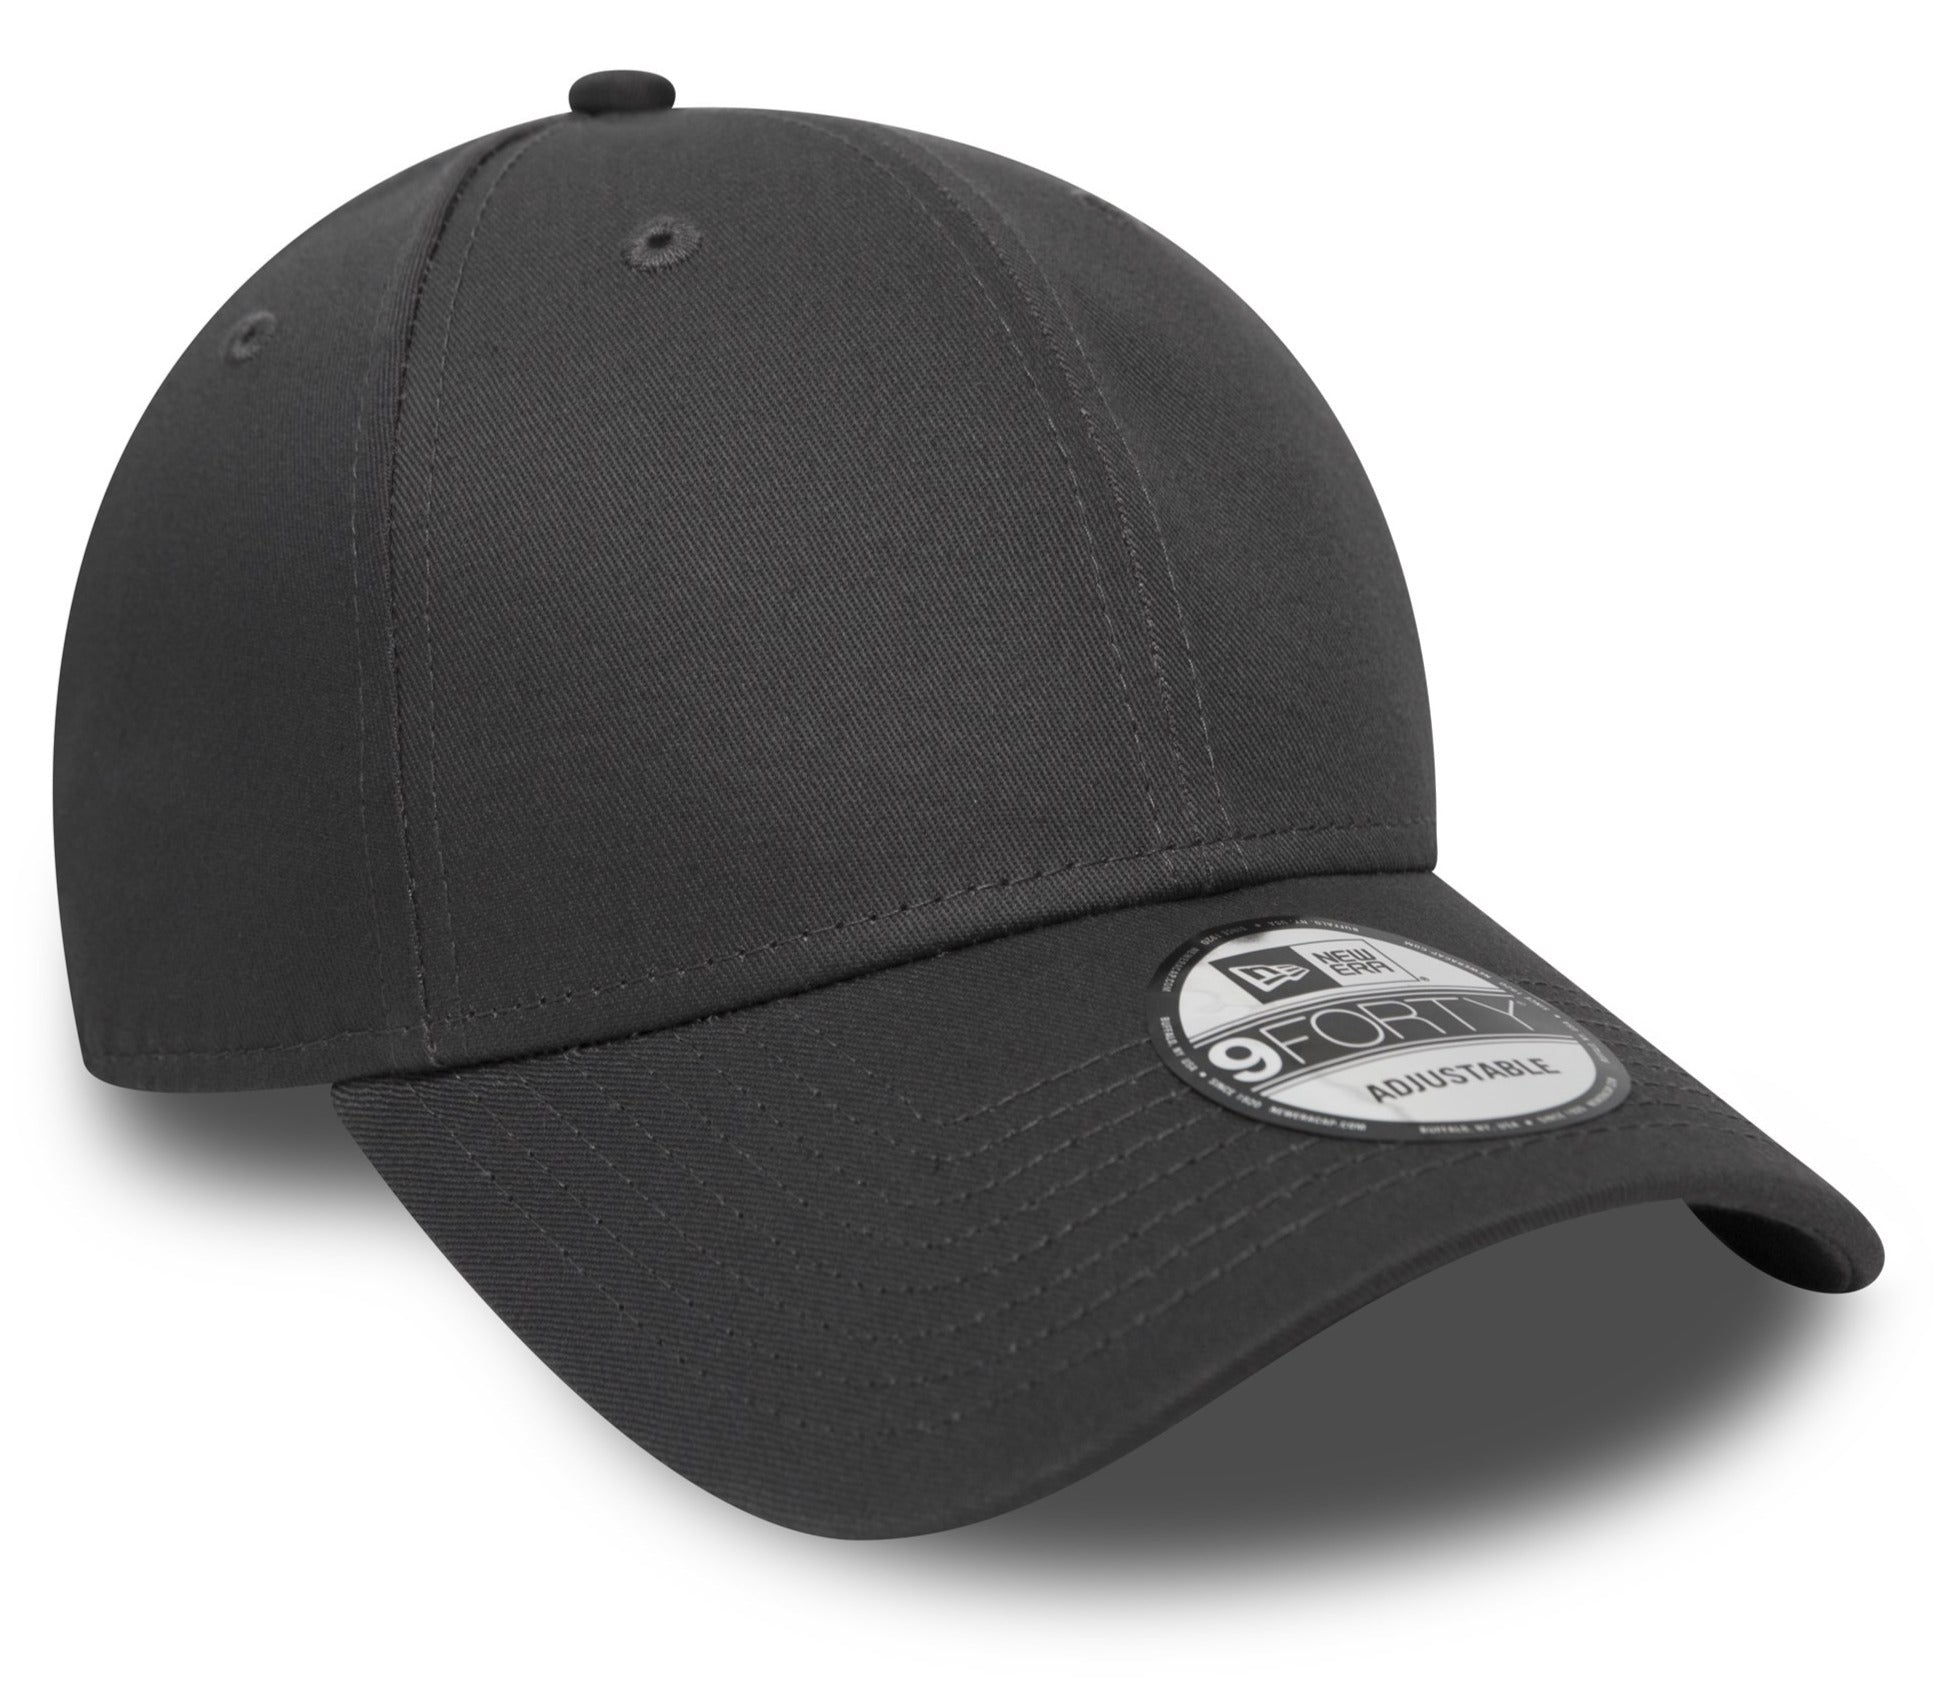 New Era Miami Heat 940 Trucker Dad Hat in Black